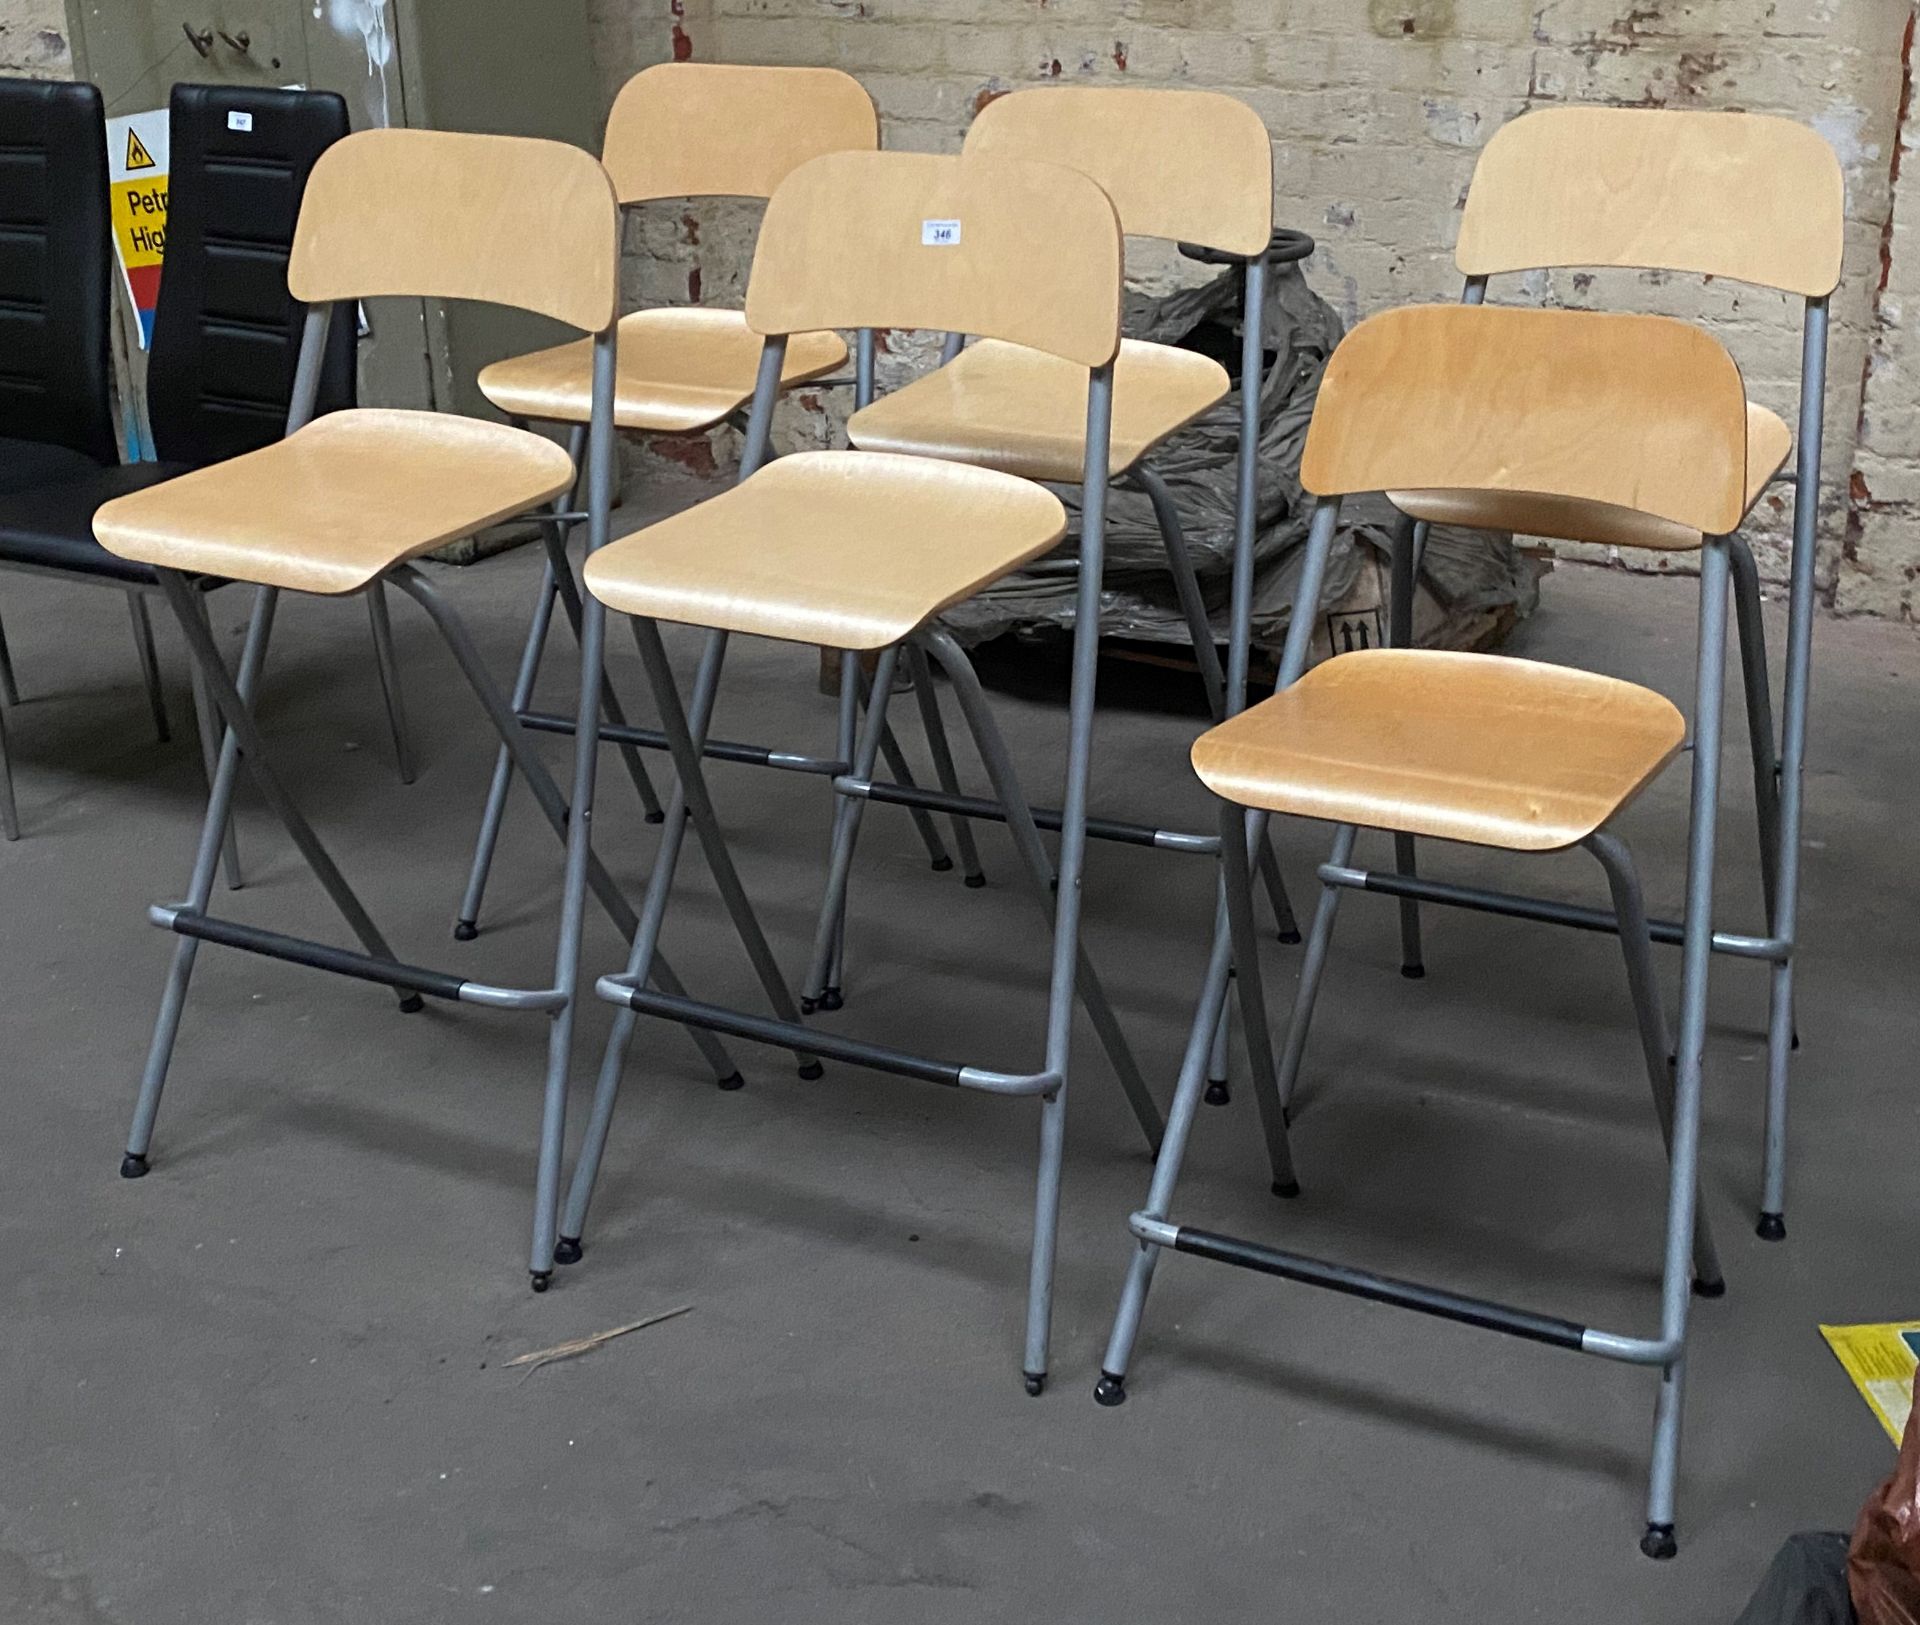 Six folding stools